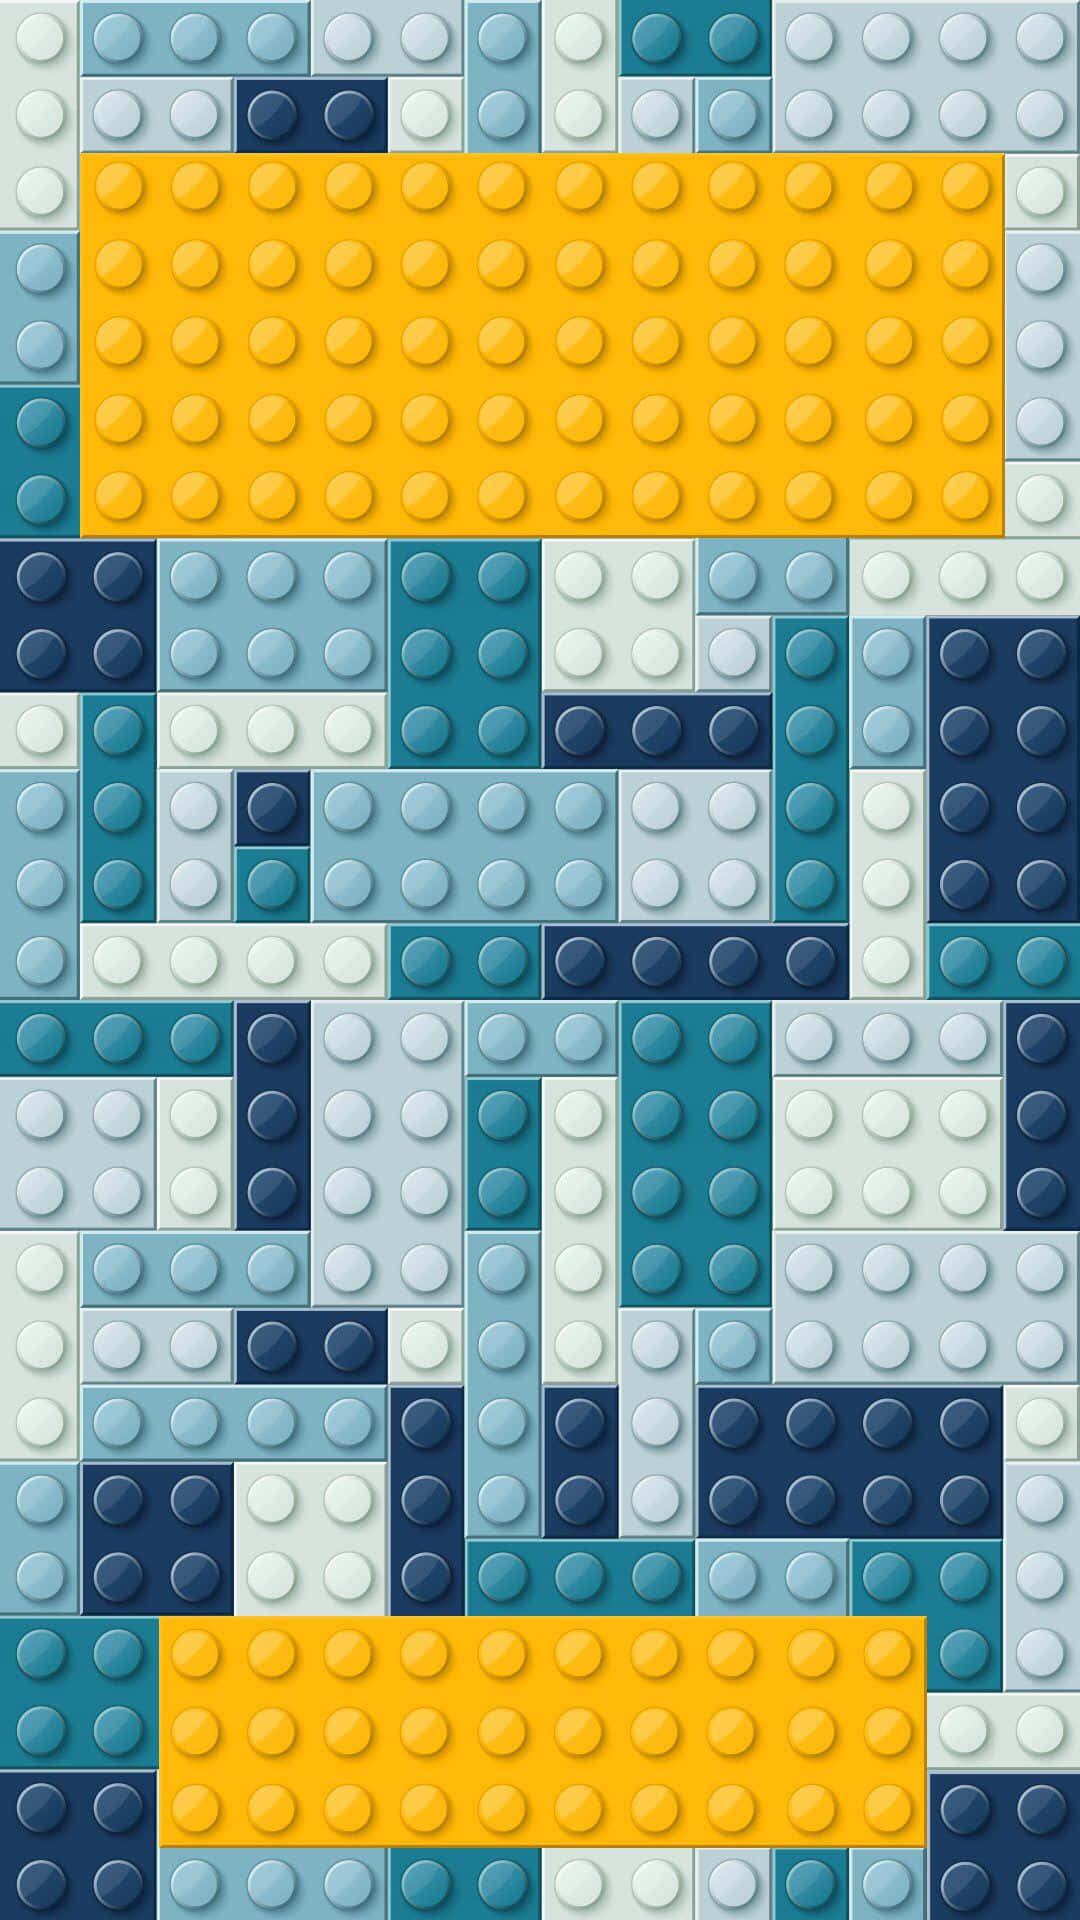 Byg med Lego-brikker - skærmbillede. Wallpaper